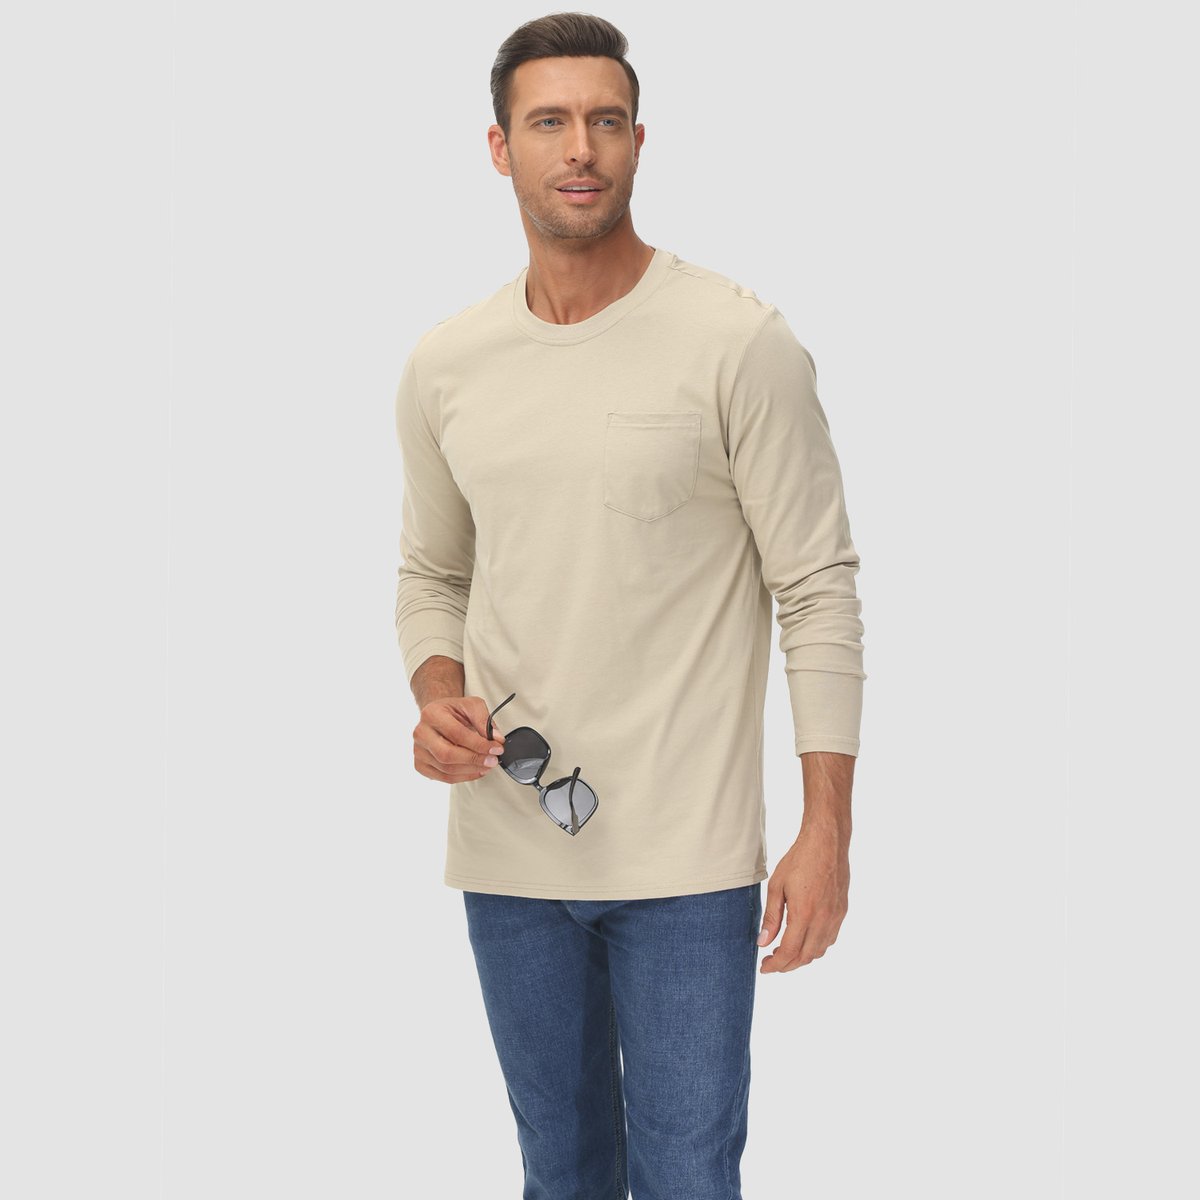 Men's Long Sleeve Shirts Cotton Are you looking for a basic shirt?😍 #menshirt #basicwear #sweatshirt #magcomsen